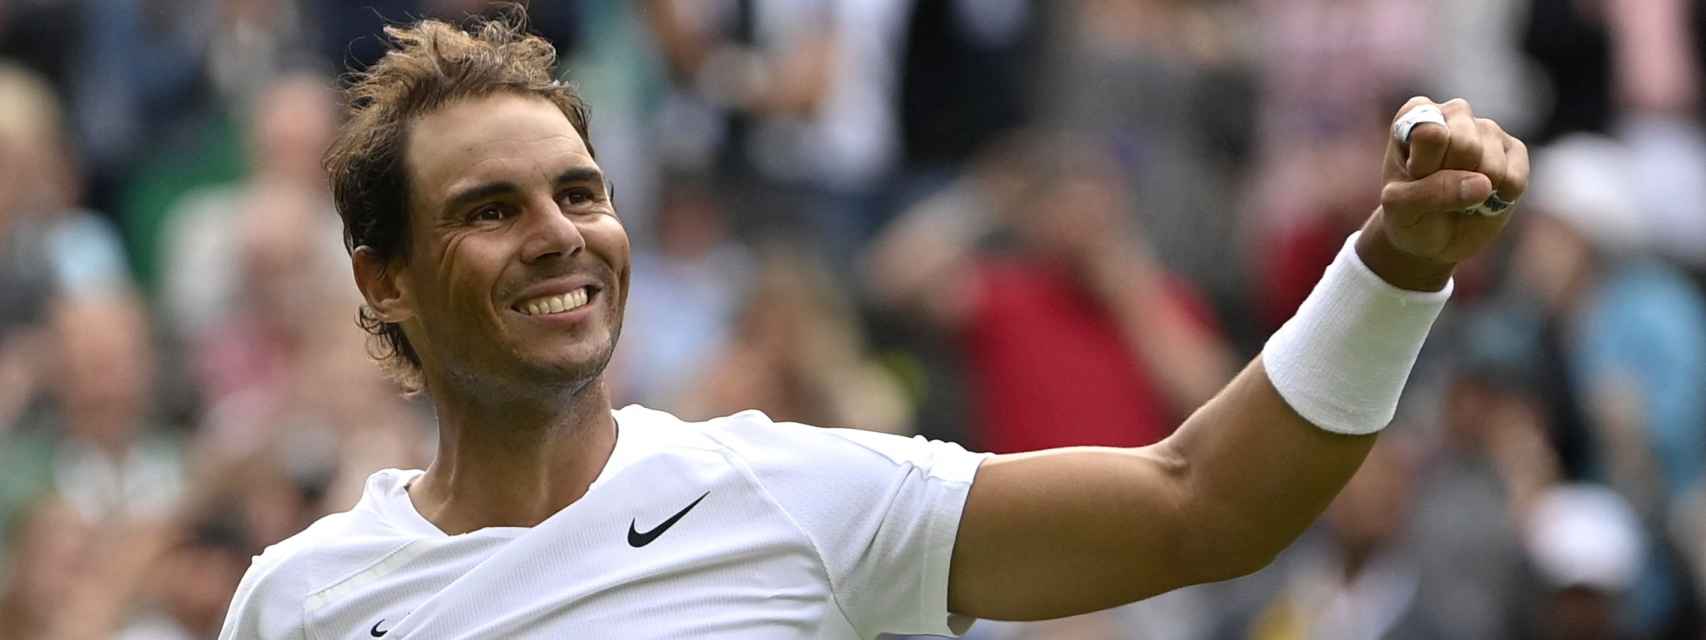 Rafa Nadal pasa la primera ronda de Wimbledon